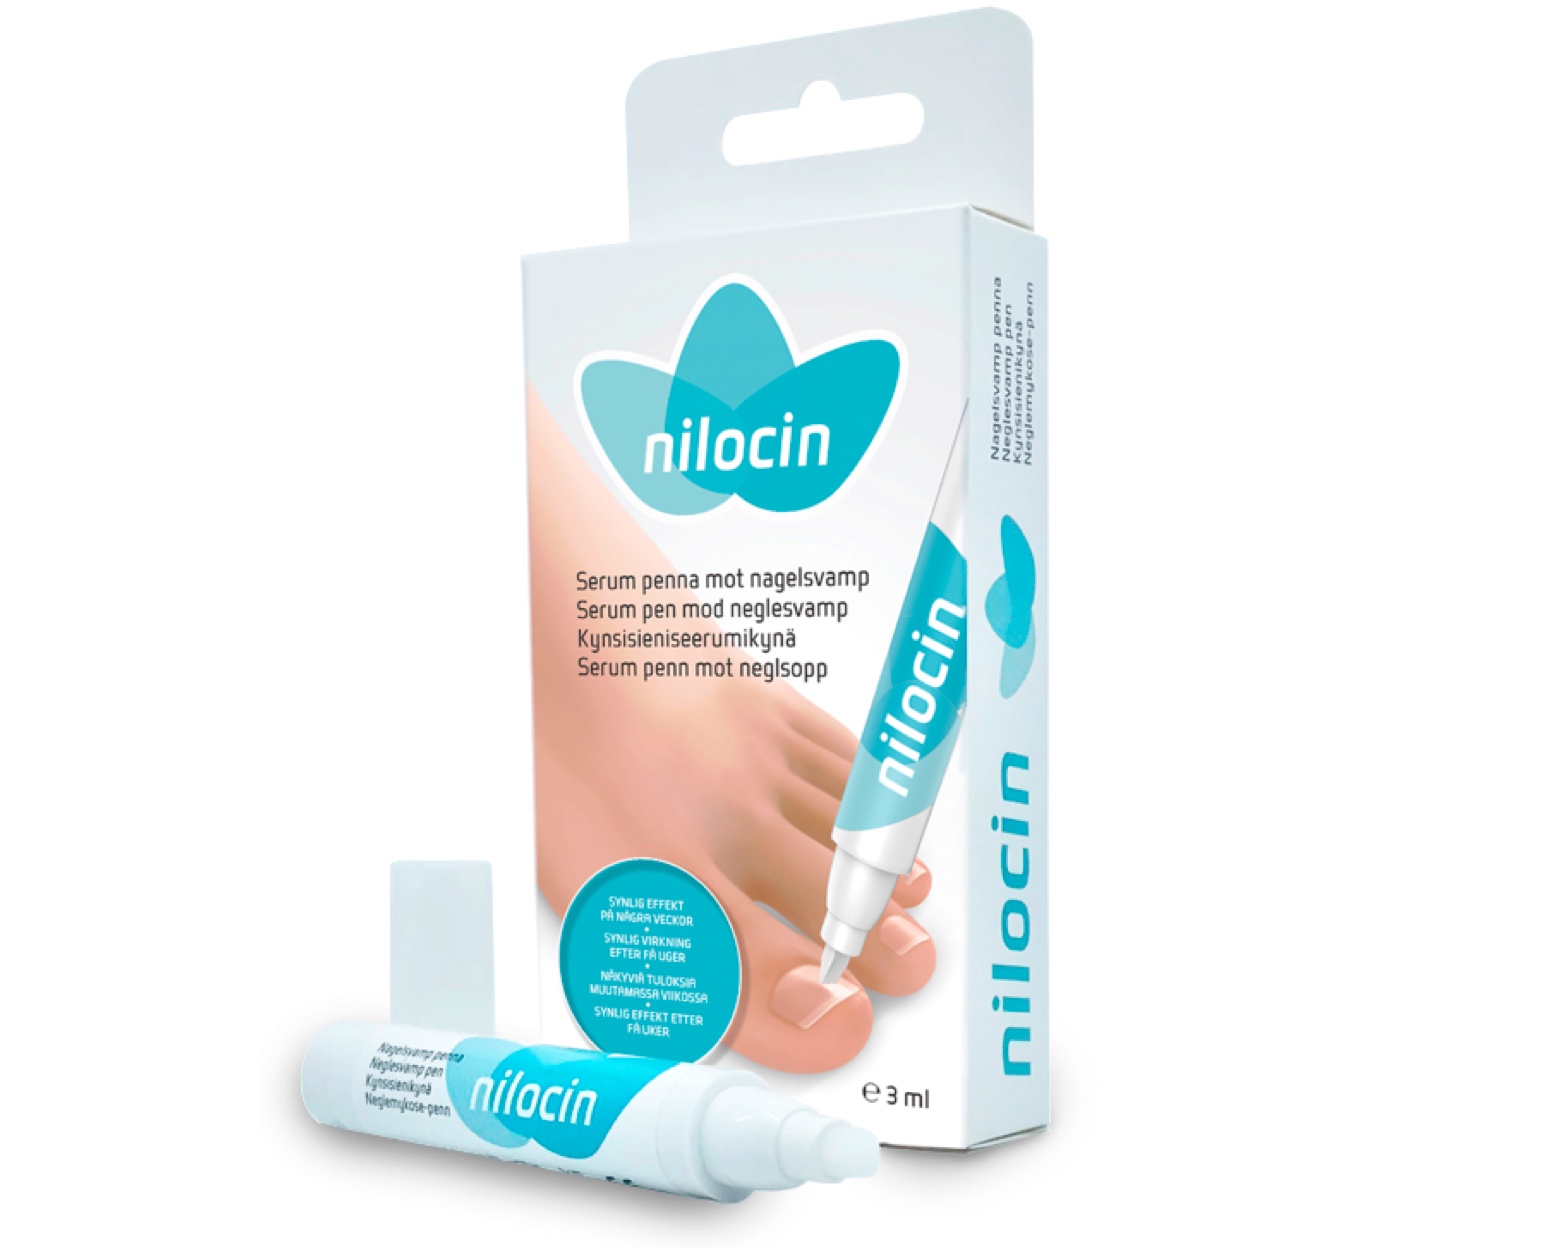 Nilocin Serum Pen mod Neglesvamp